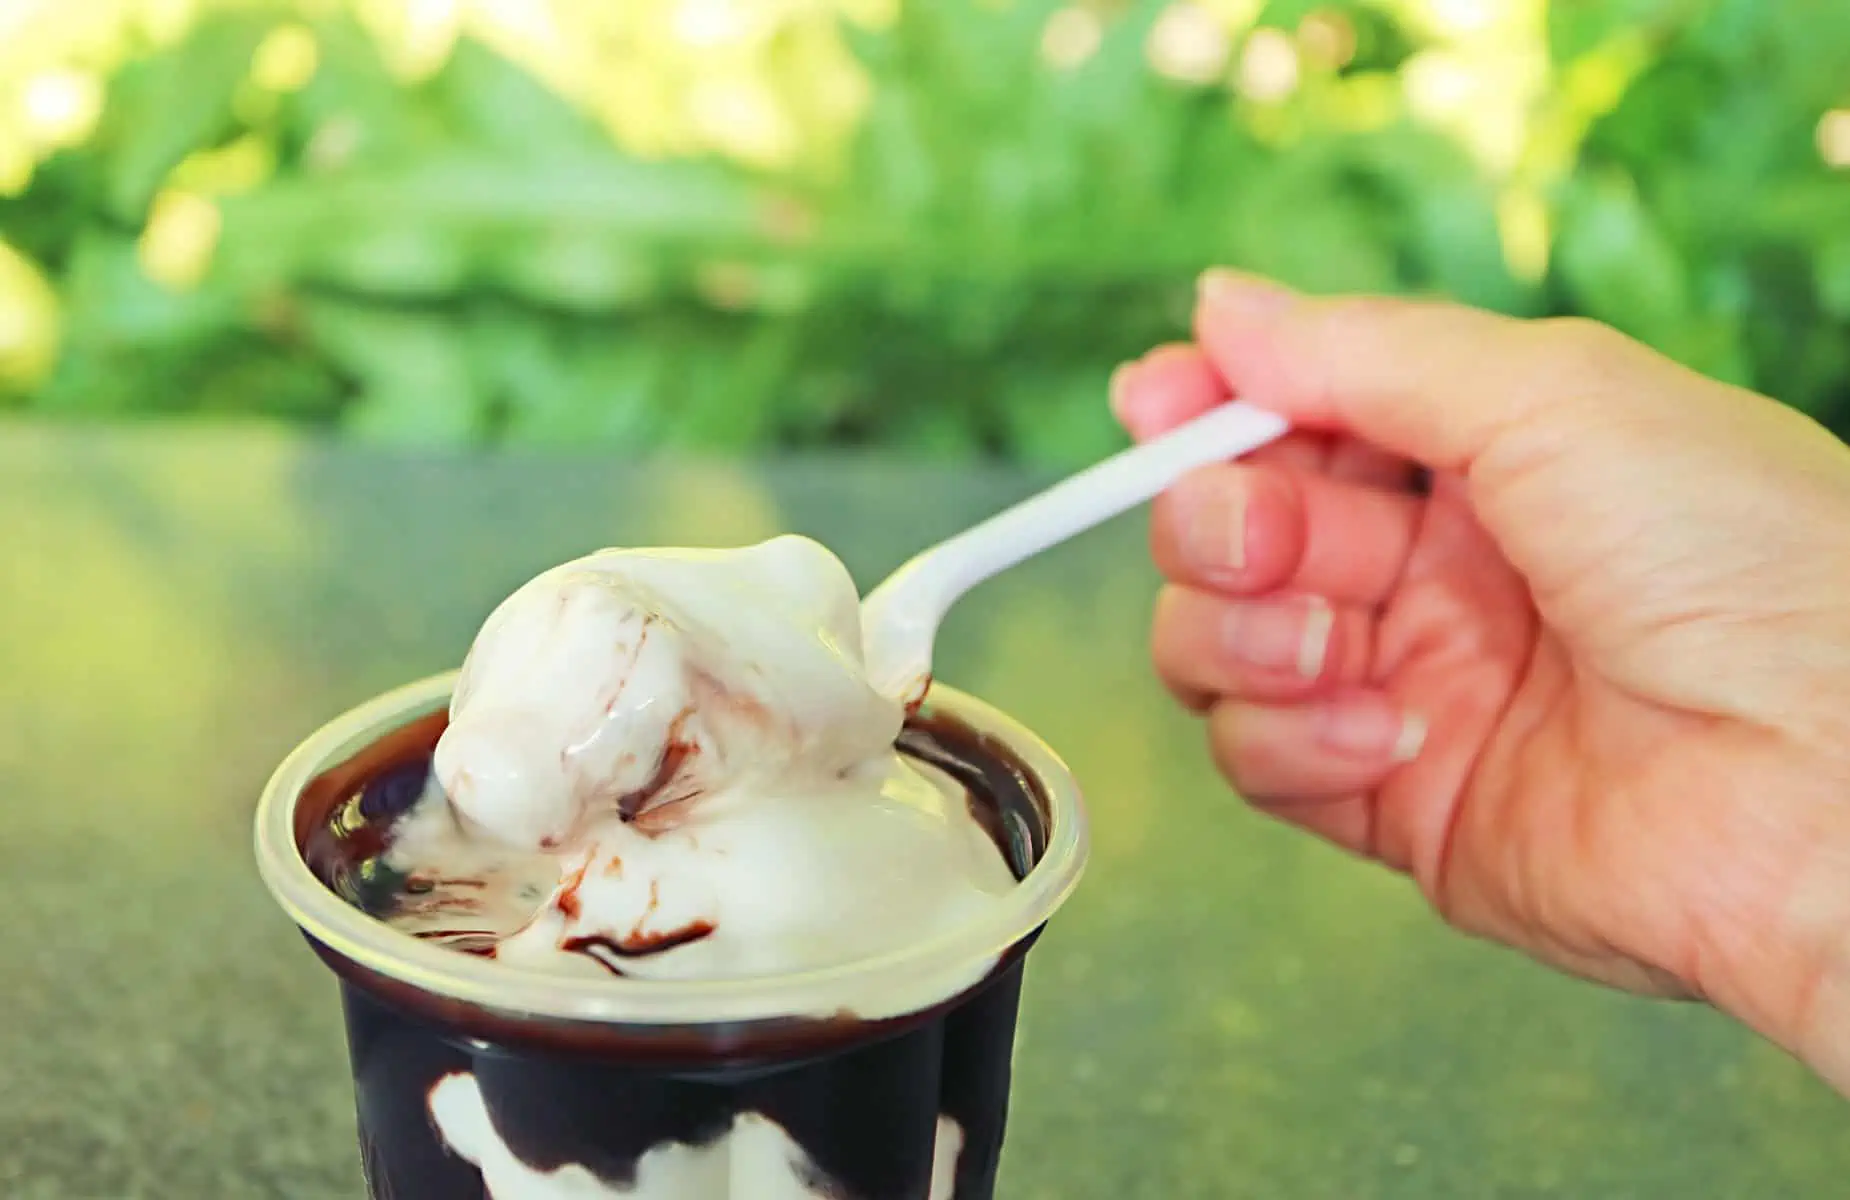 helado retirado del mercado podria estar vinculado a brotes de listeria